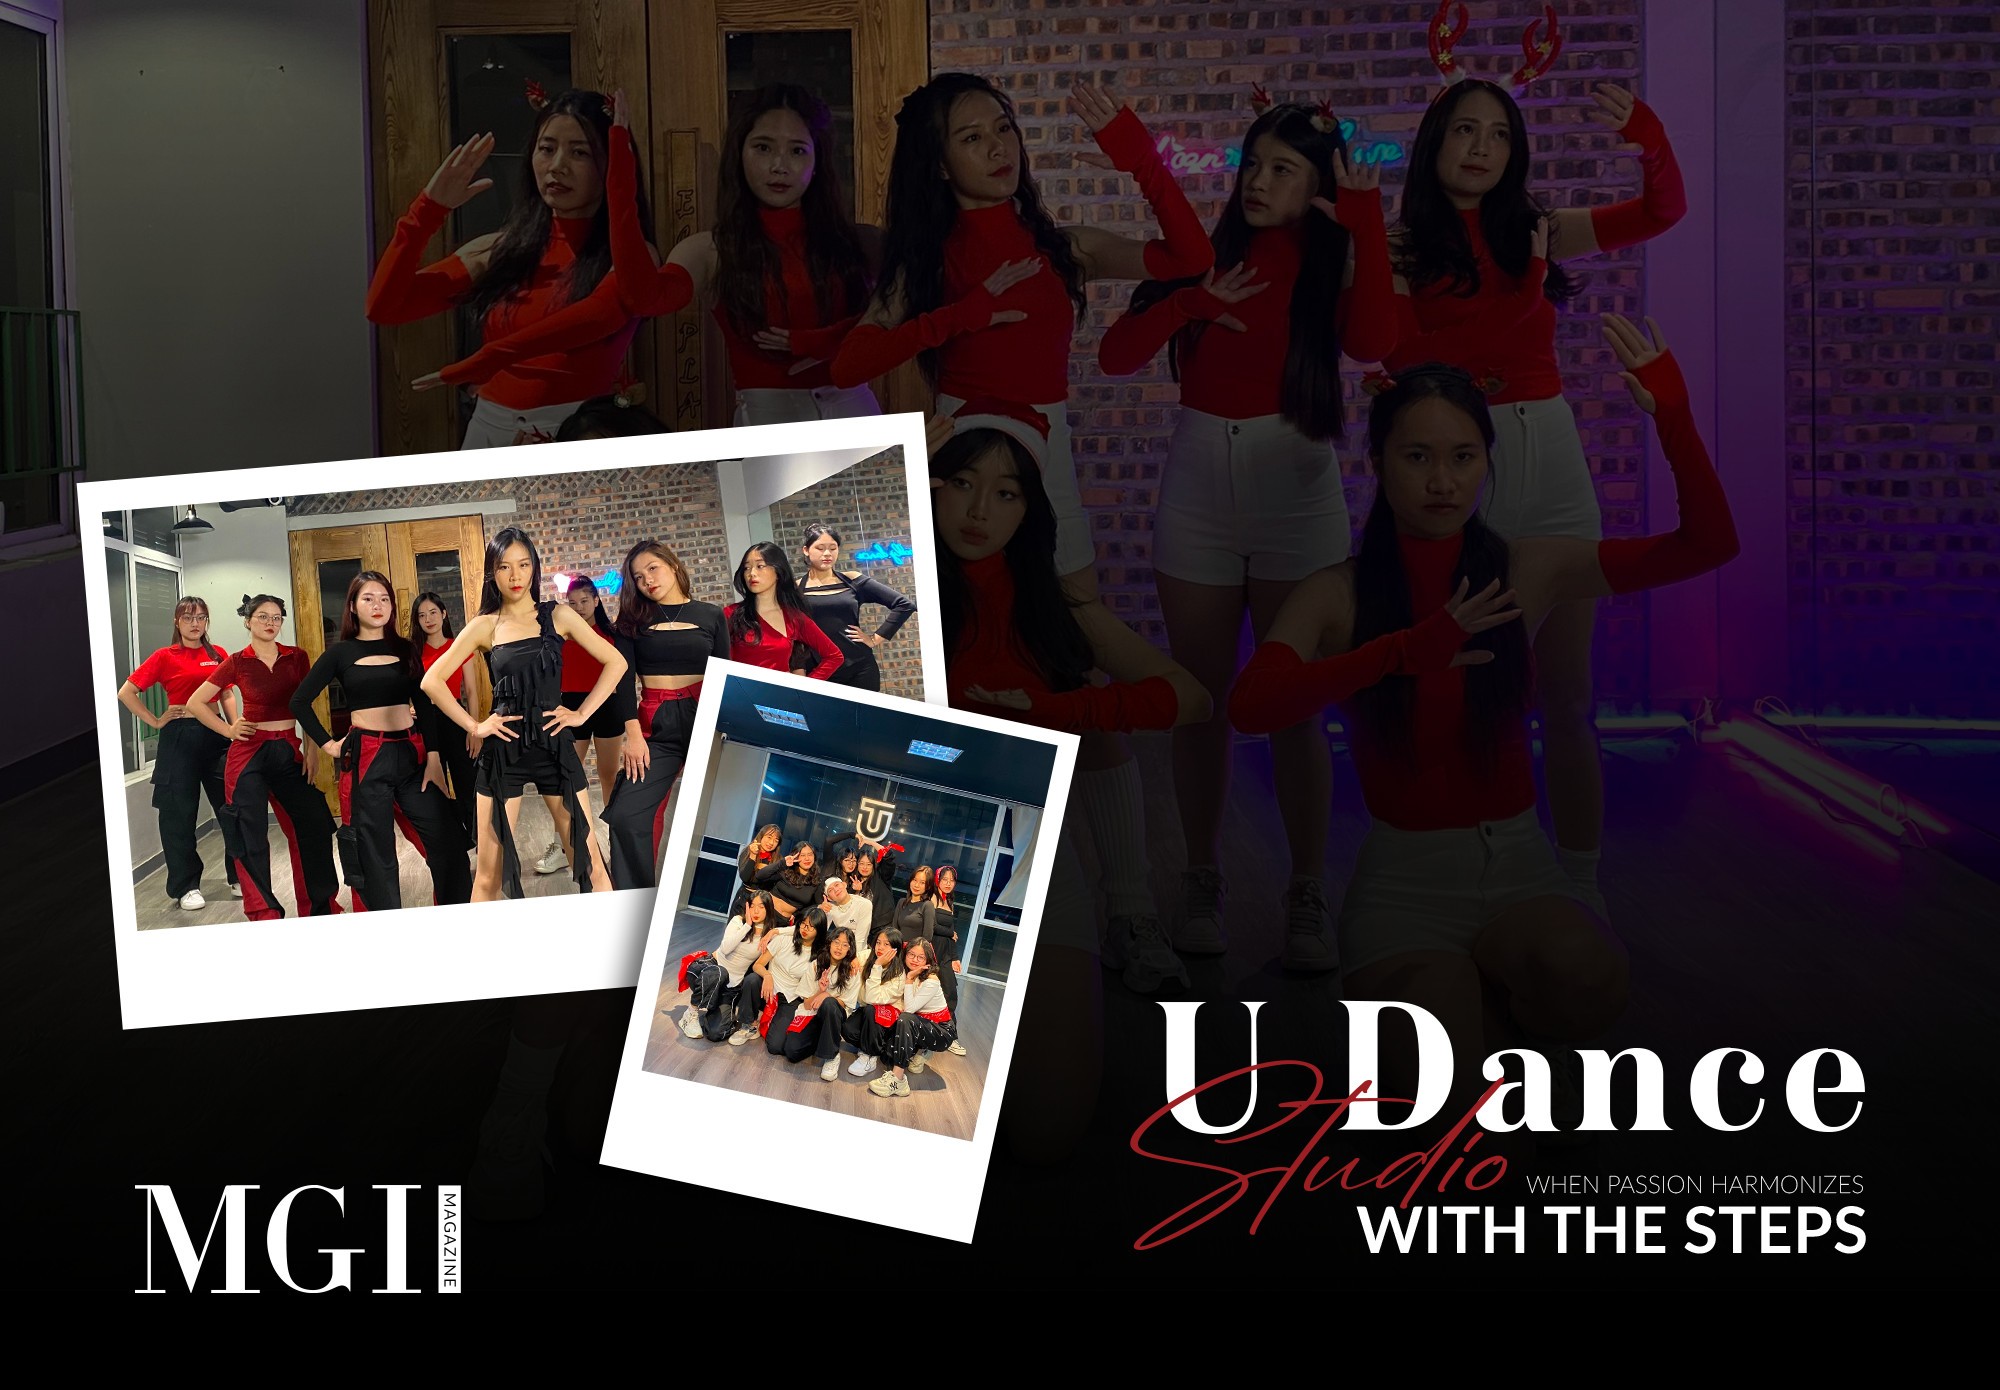 U Dance Studio - When passion blends with rhythm